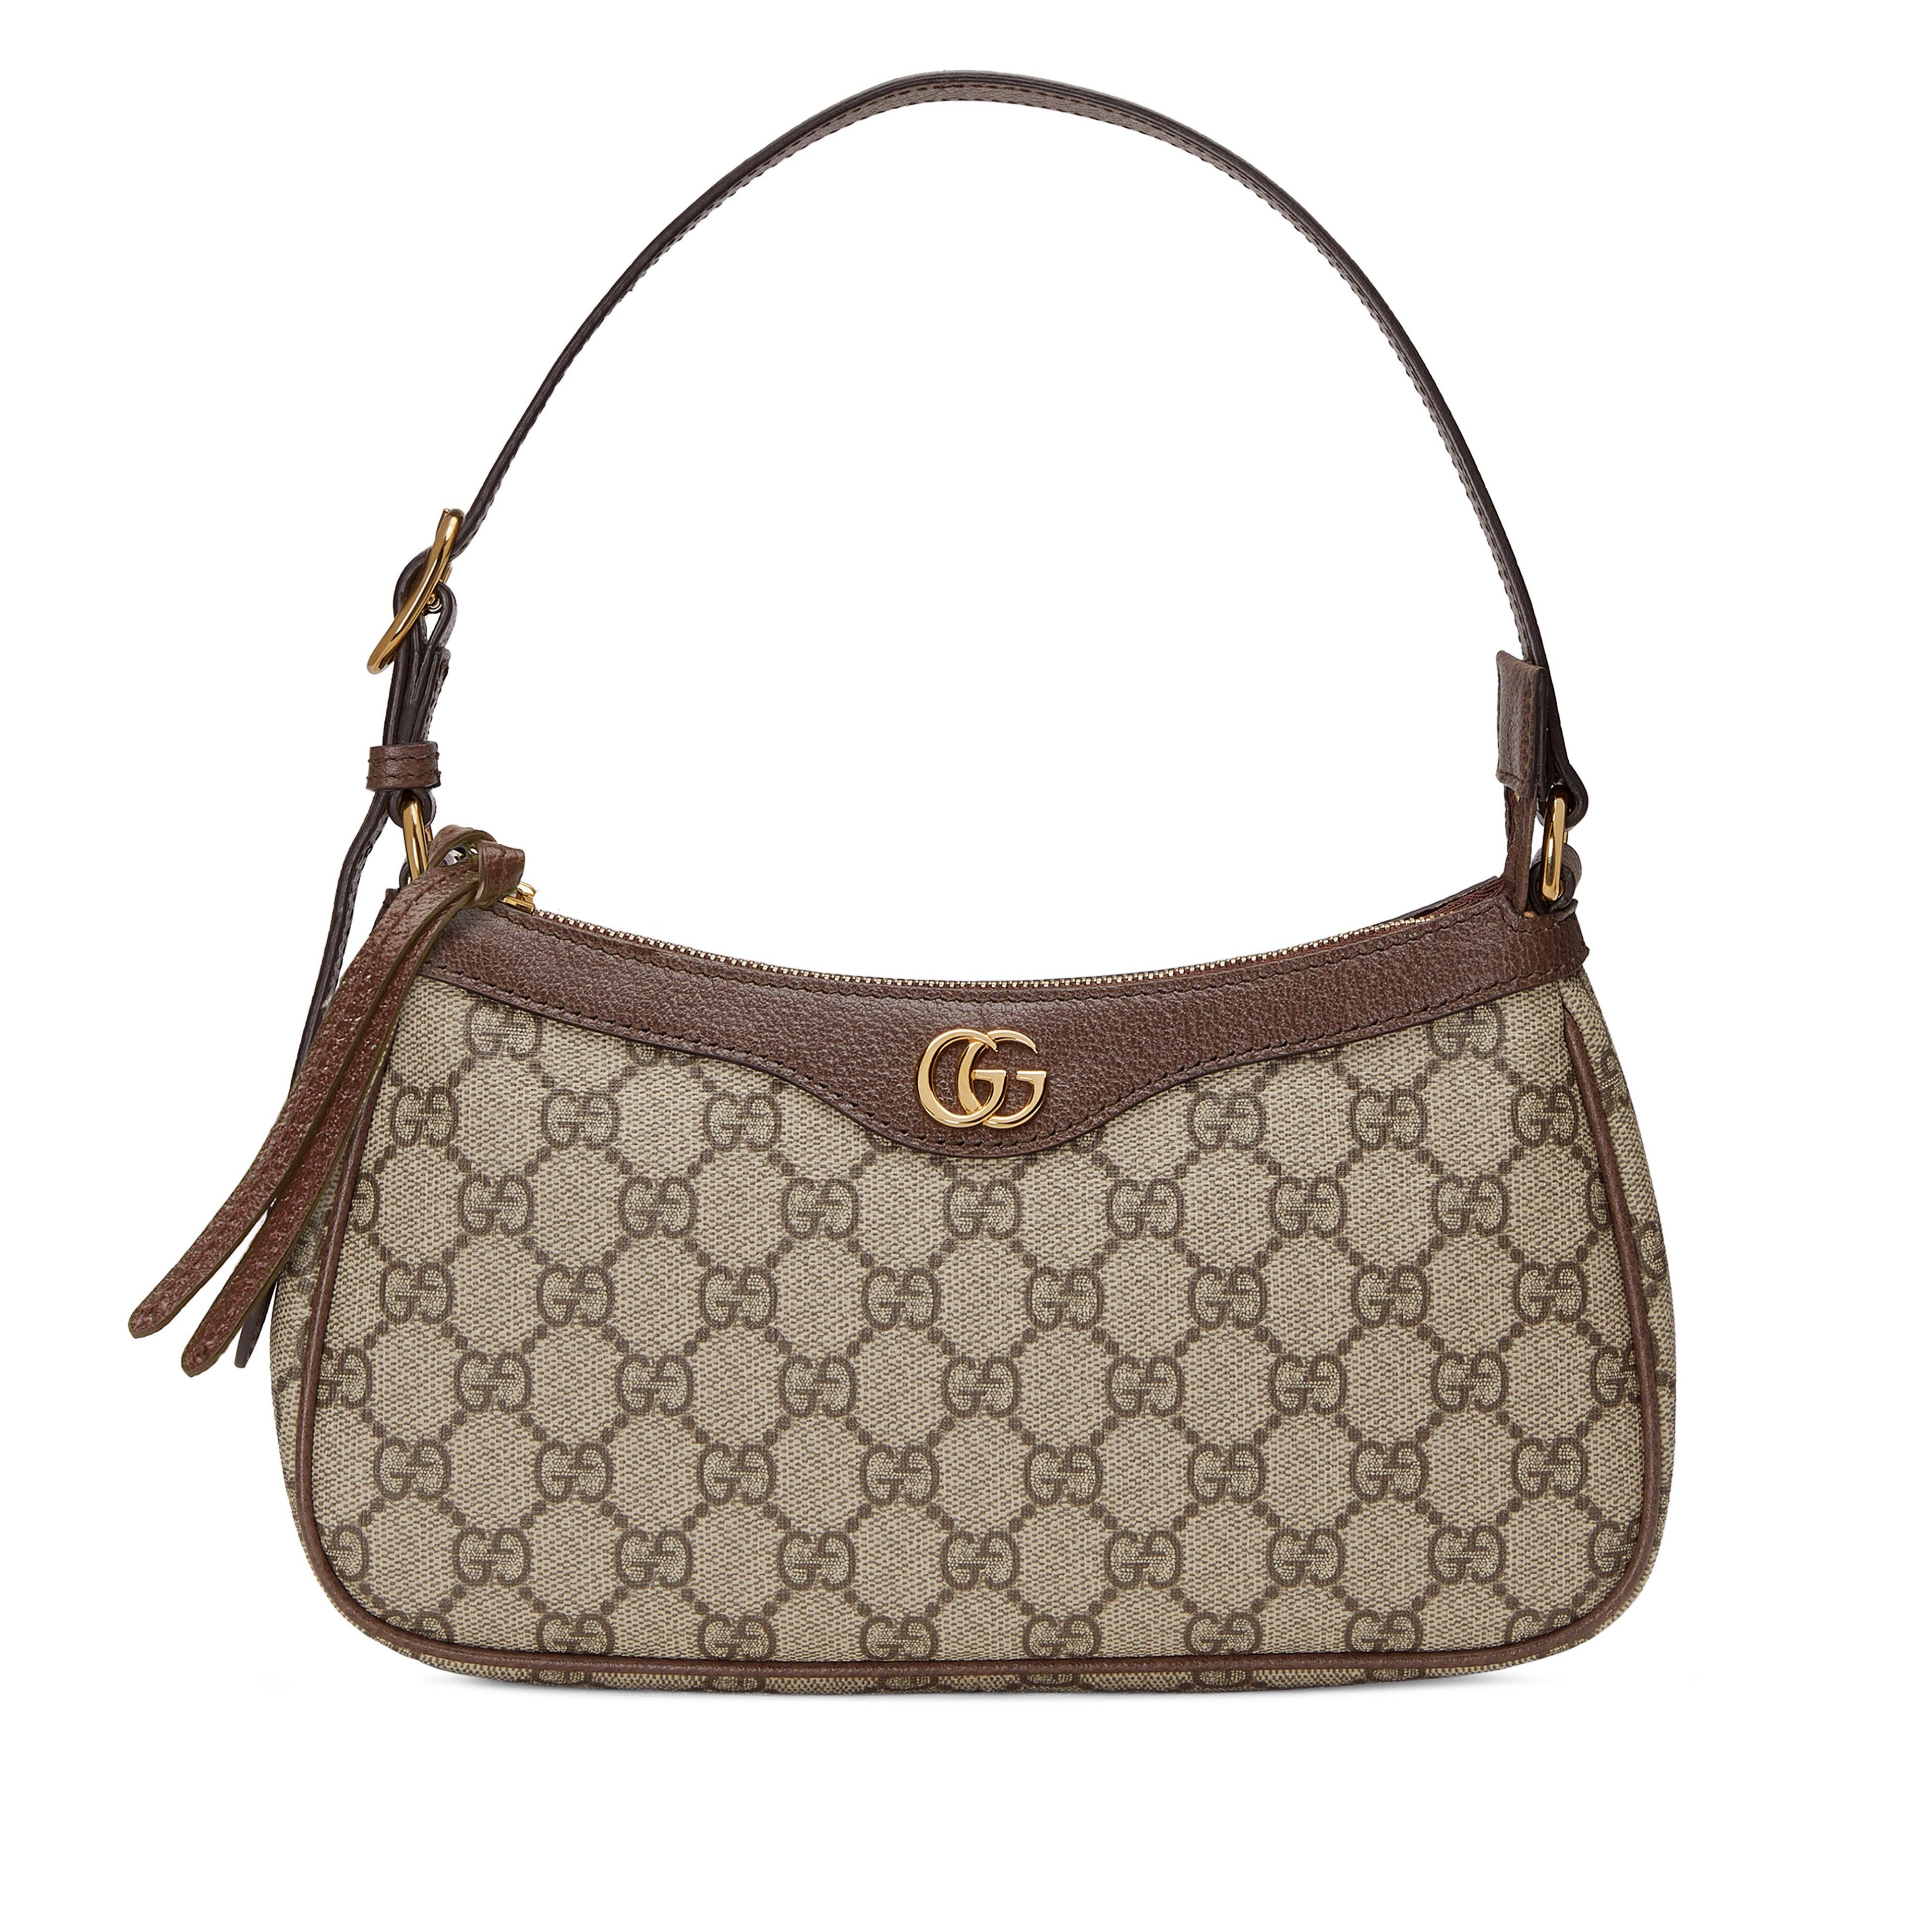 Gucci - Women’s Ophidia Shoulder Bag - (Beige/Ebony) by GUCCI